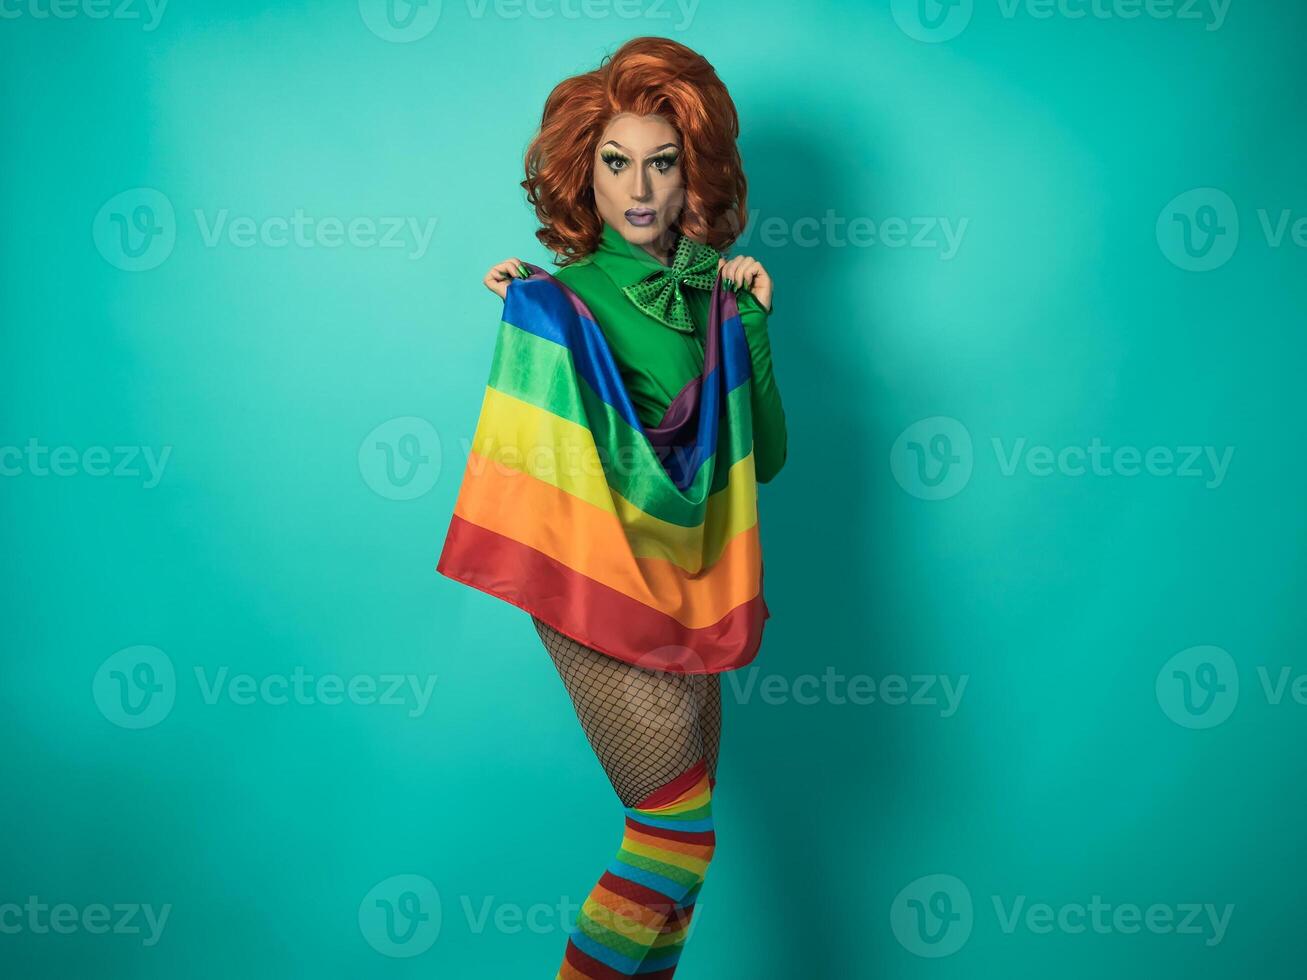 Happy drag queen celebrating gay pride holding rainbow flag - LGBTQ social community concept photo